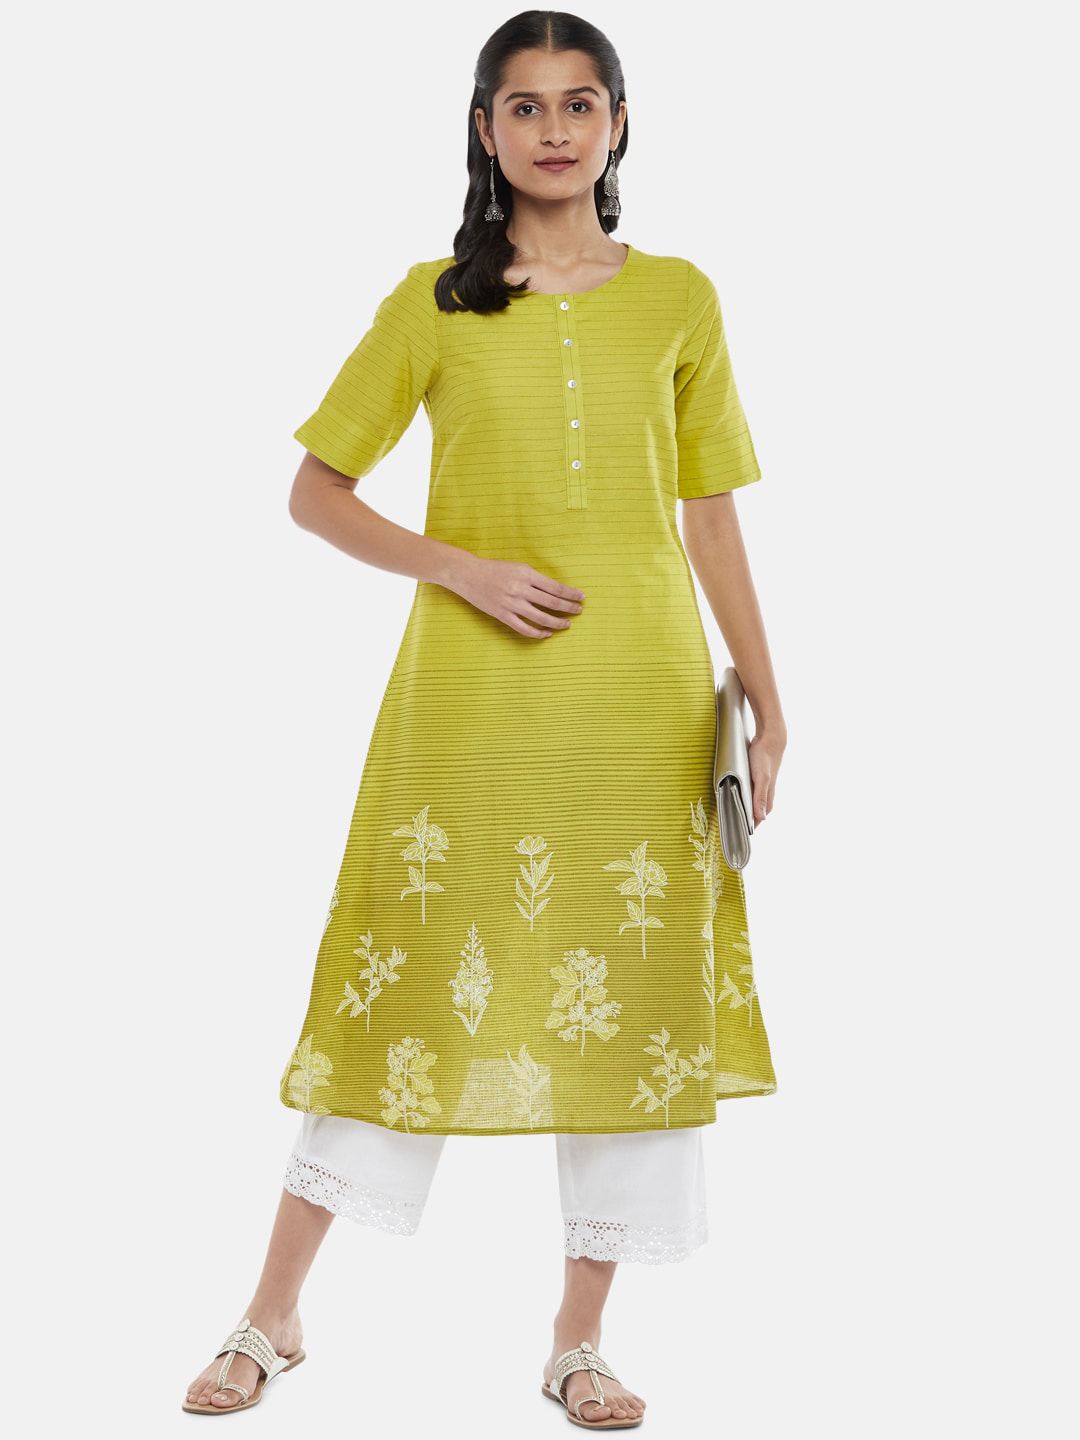 RANGMANCH BY PANTALOONS Women Lime Green Striped Kurta Price in India